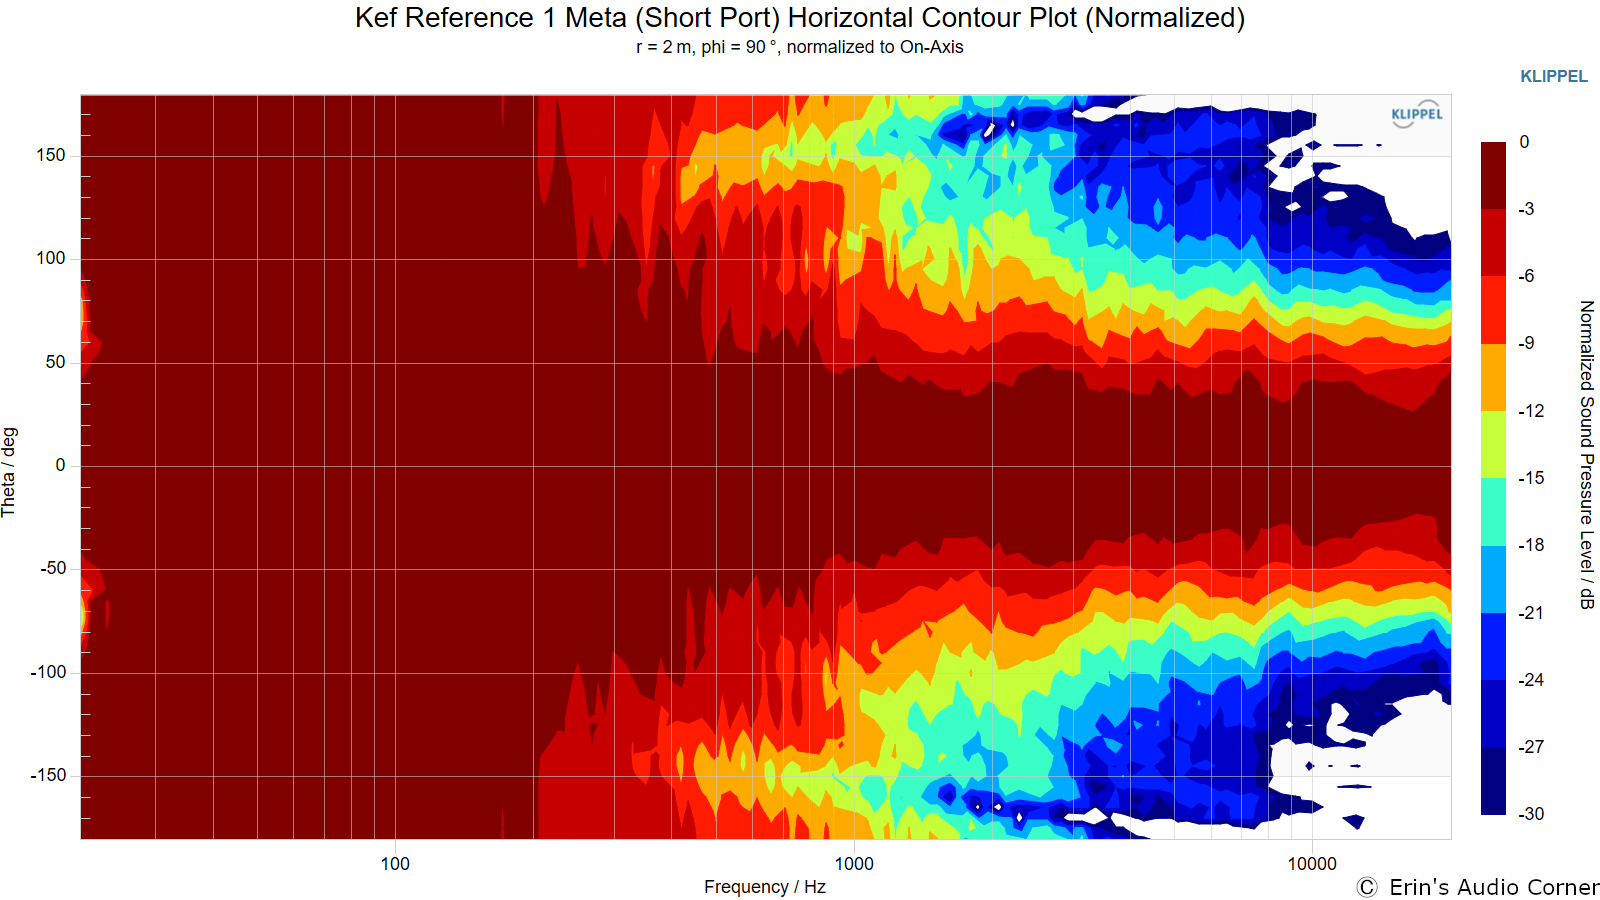 Kef Reference 1 Meta (Short Port) Horizontal Contour Plot (Normalized).png